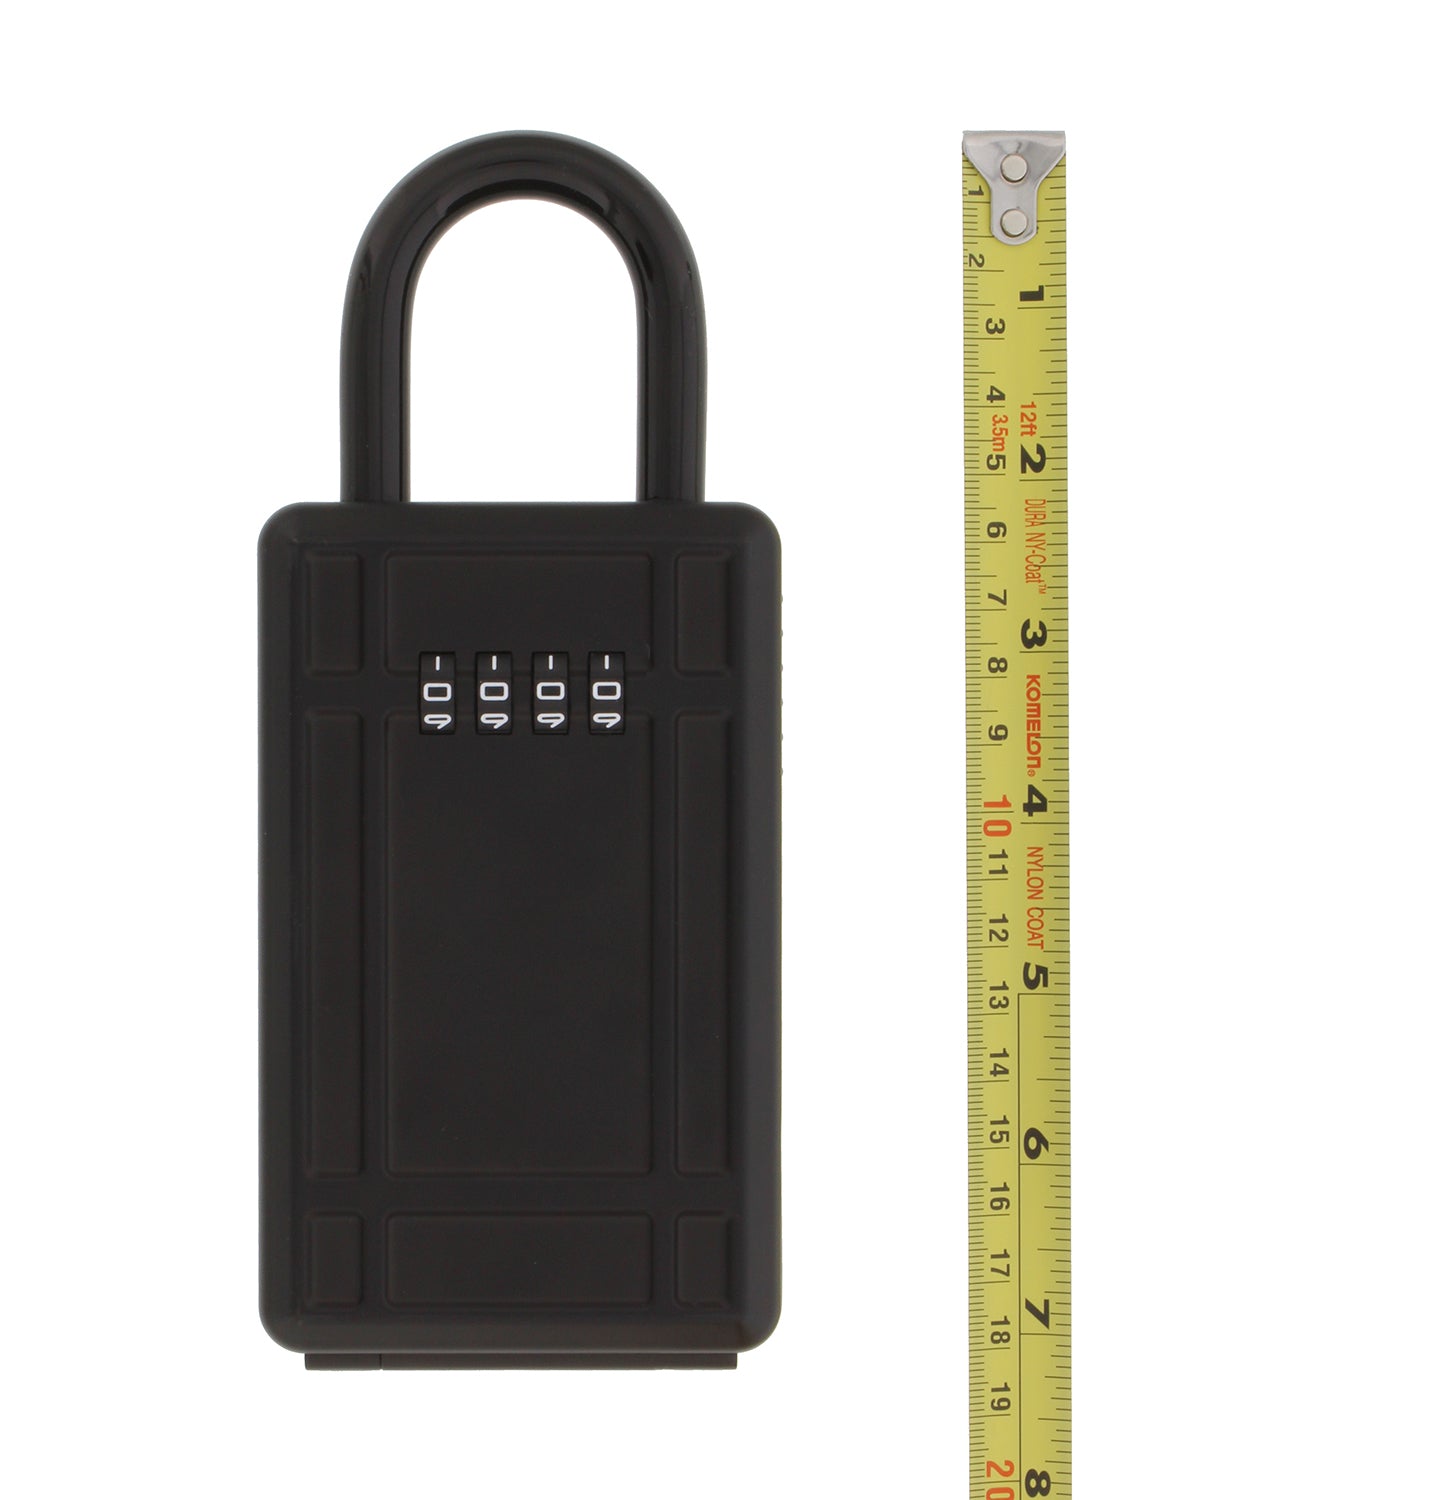 7penn Cable Lock Tumbler Combination Adjustable 6.5 Foot Long Cord Combo Lock